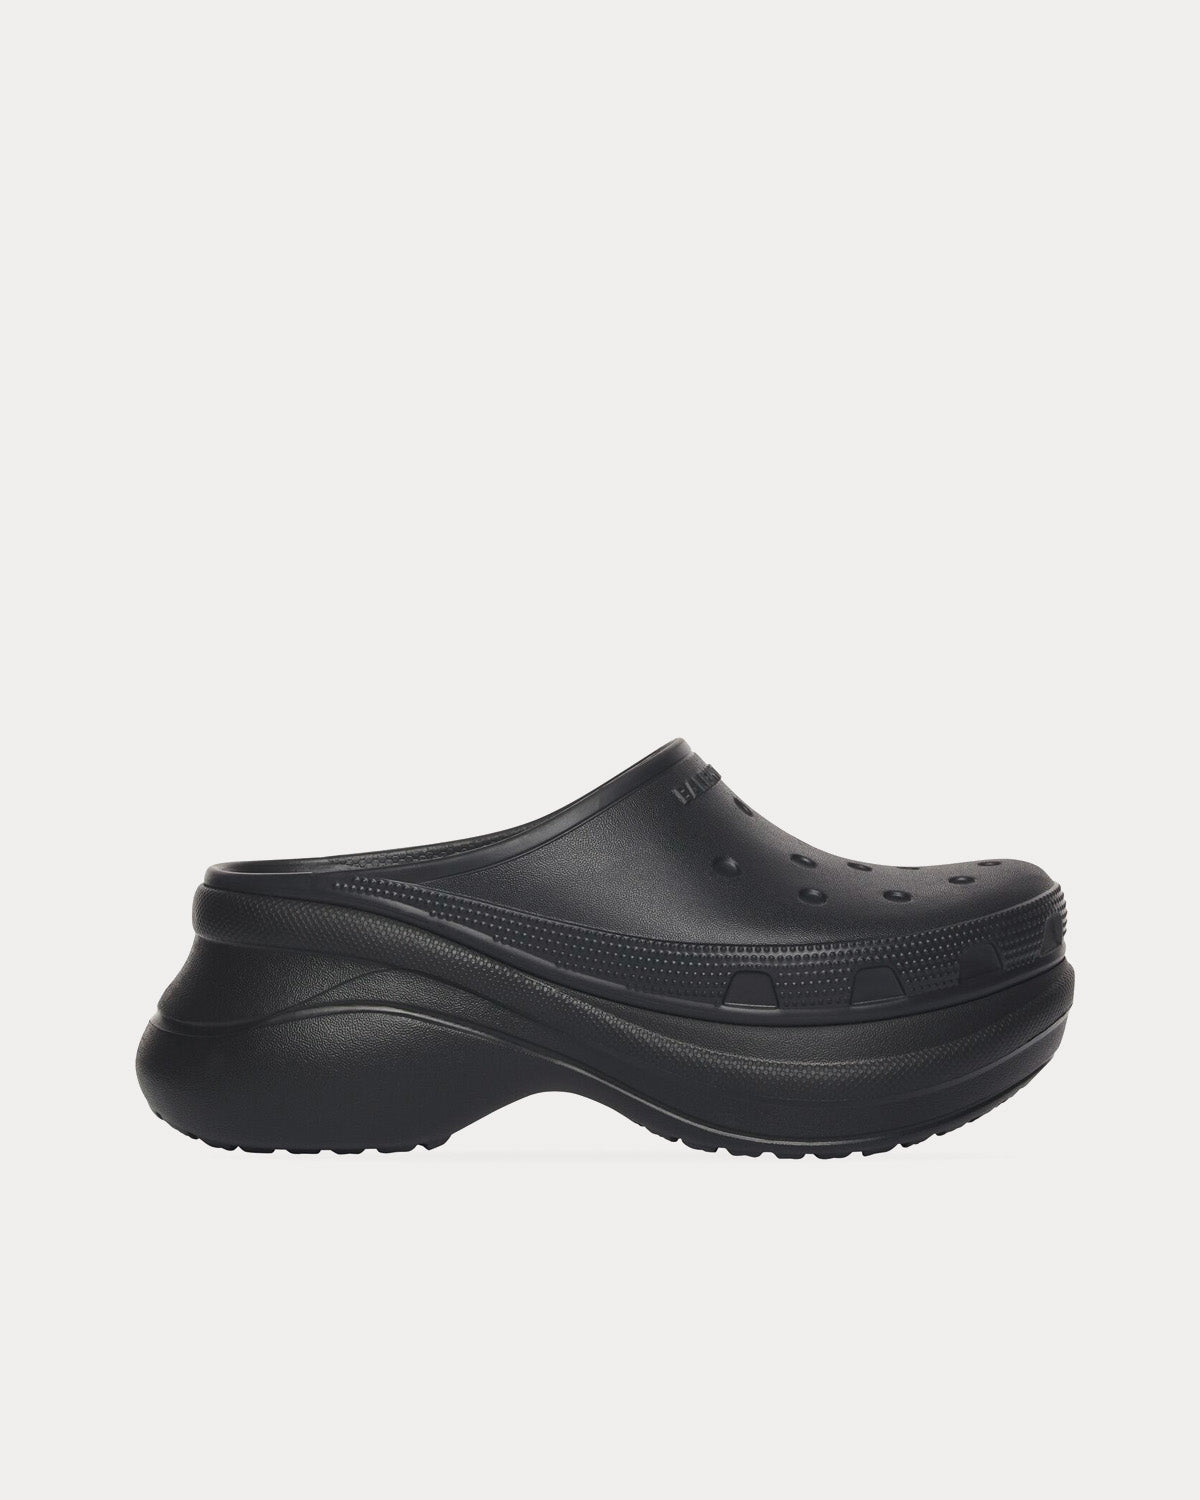 Balenciaga x Crocs - Rubber Mule Black Slip Ons